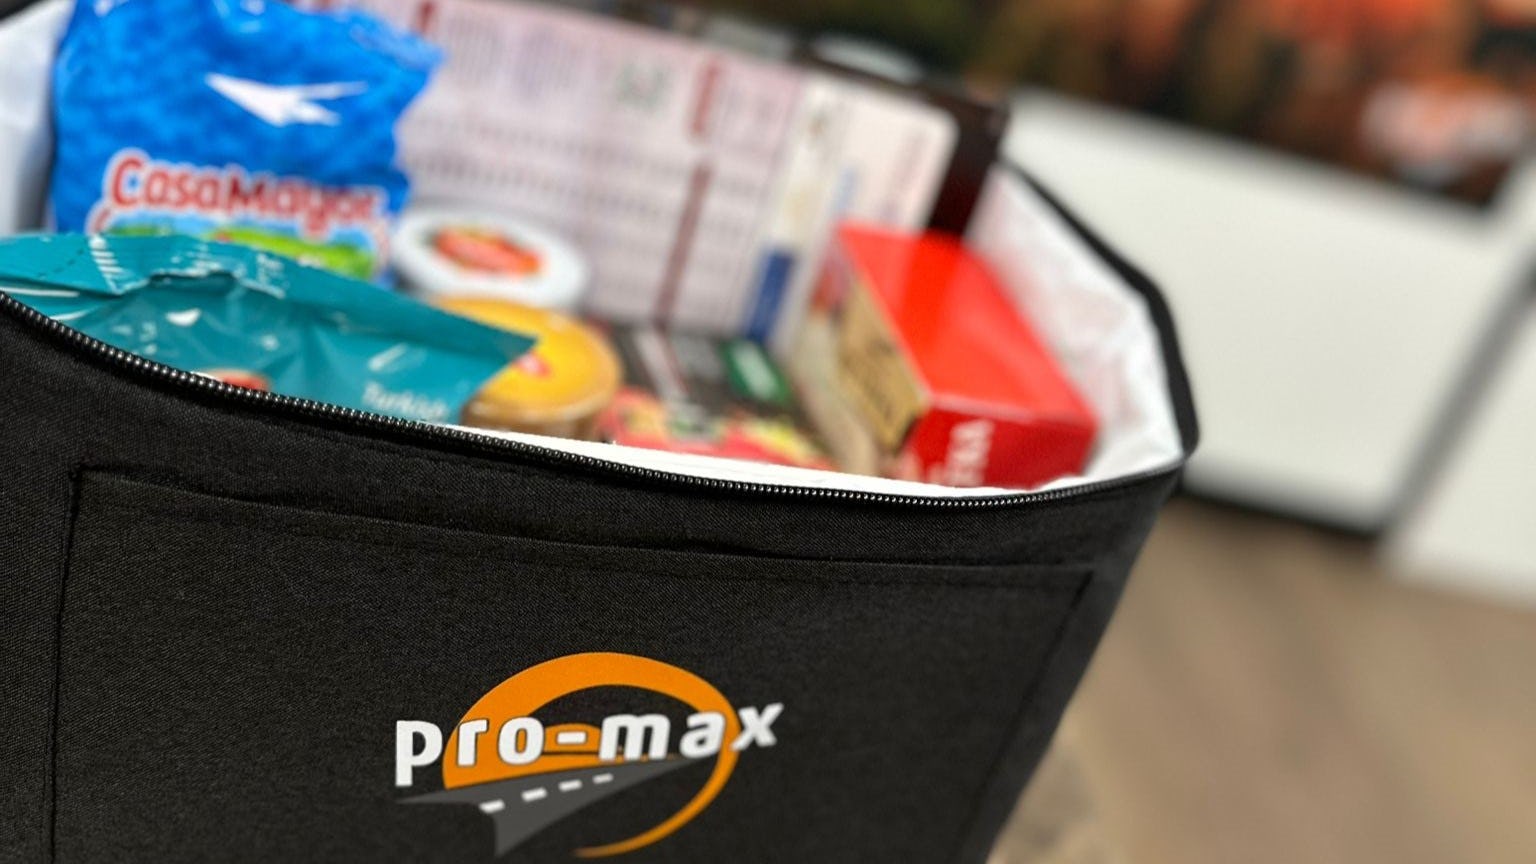 Promax deelt naast kerstpakket ook ramadanpakketten uit